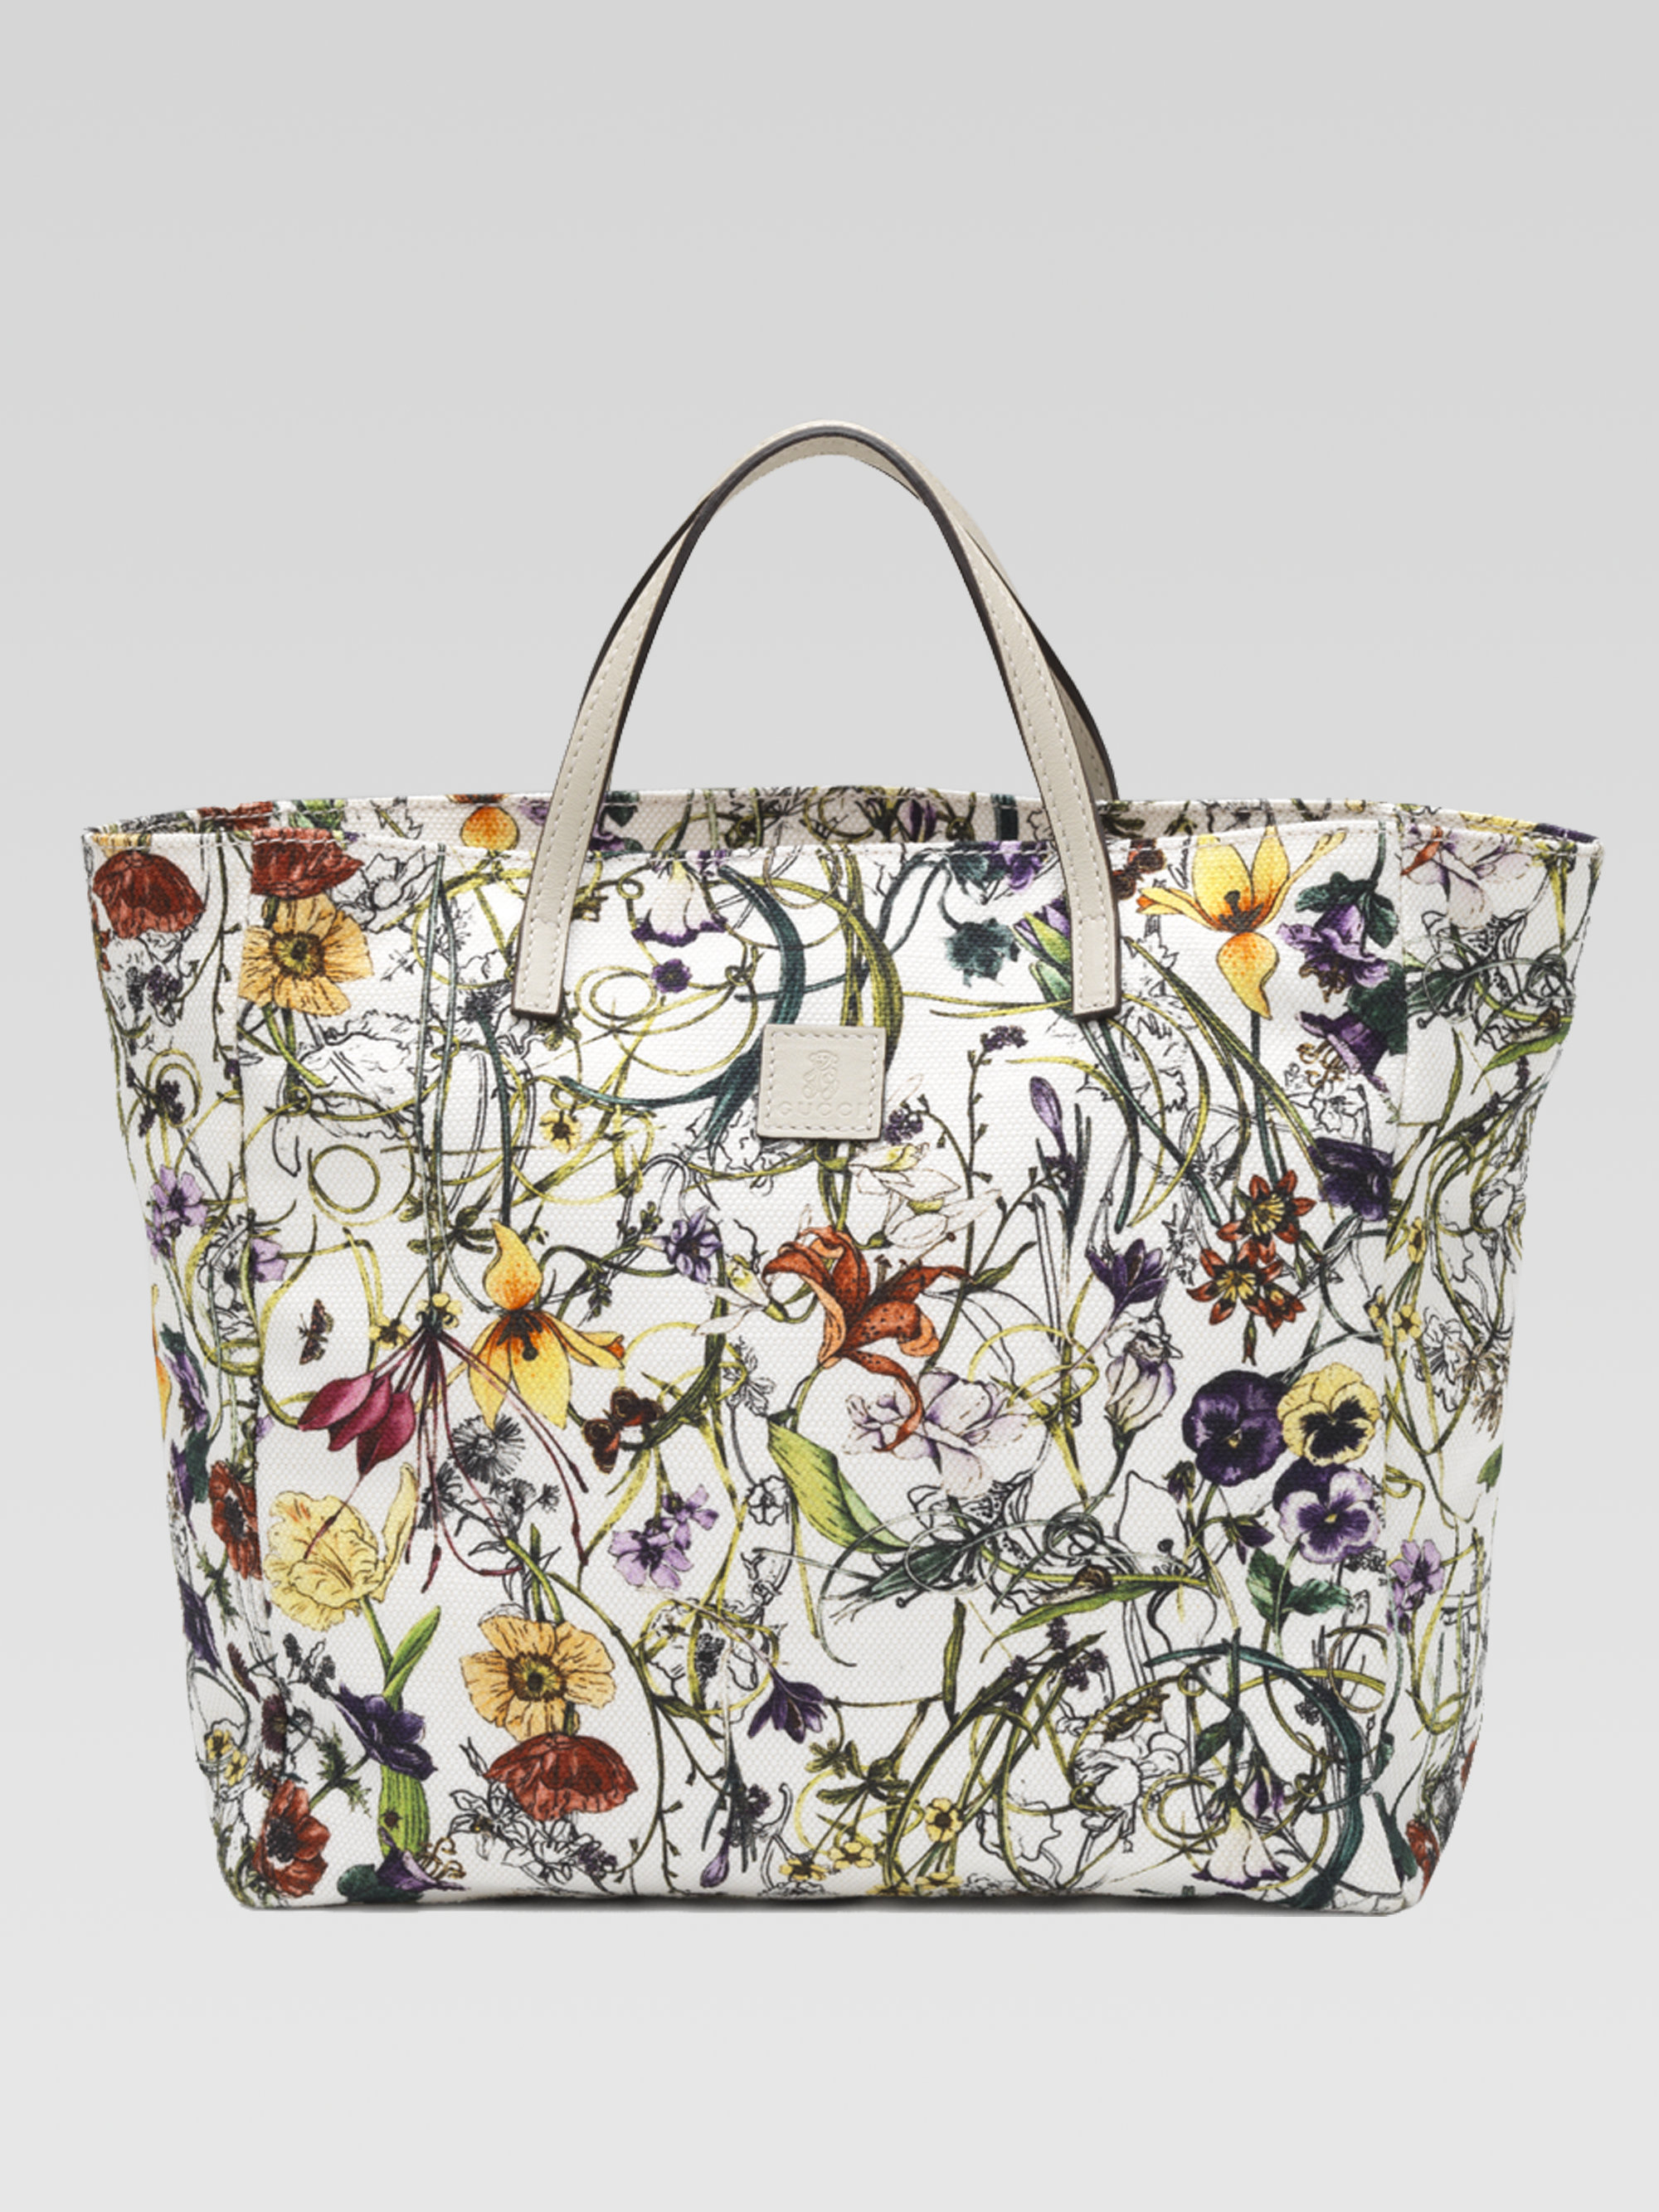 gucci white floral bag